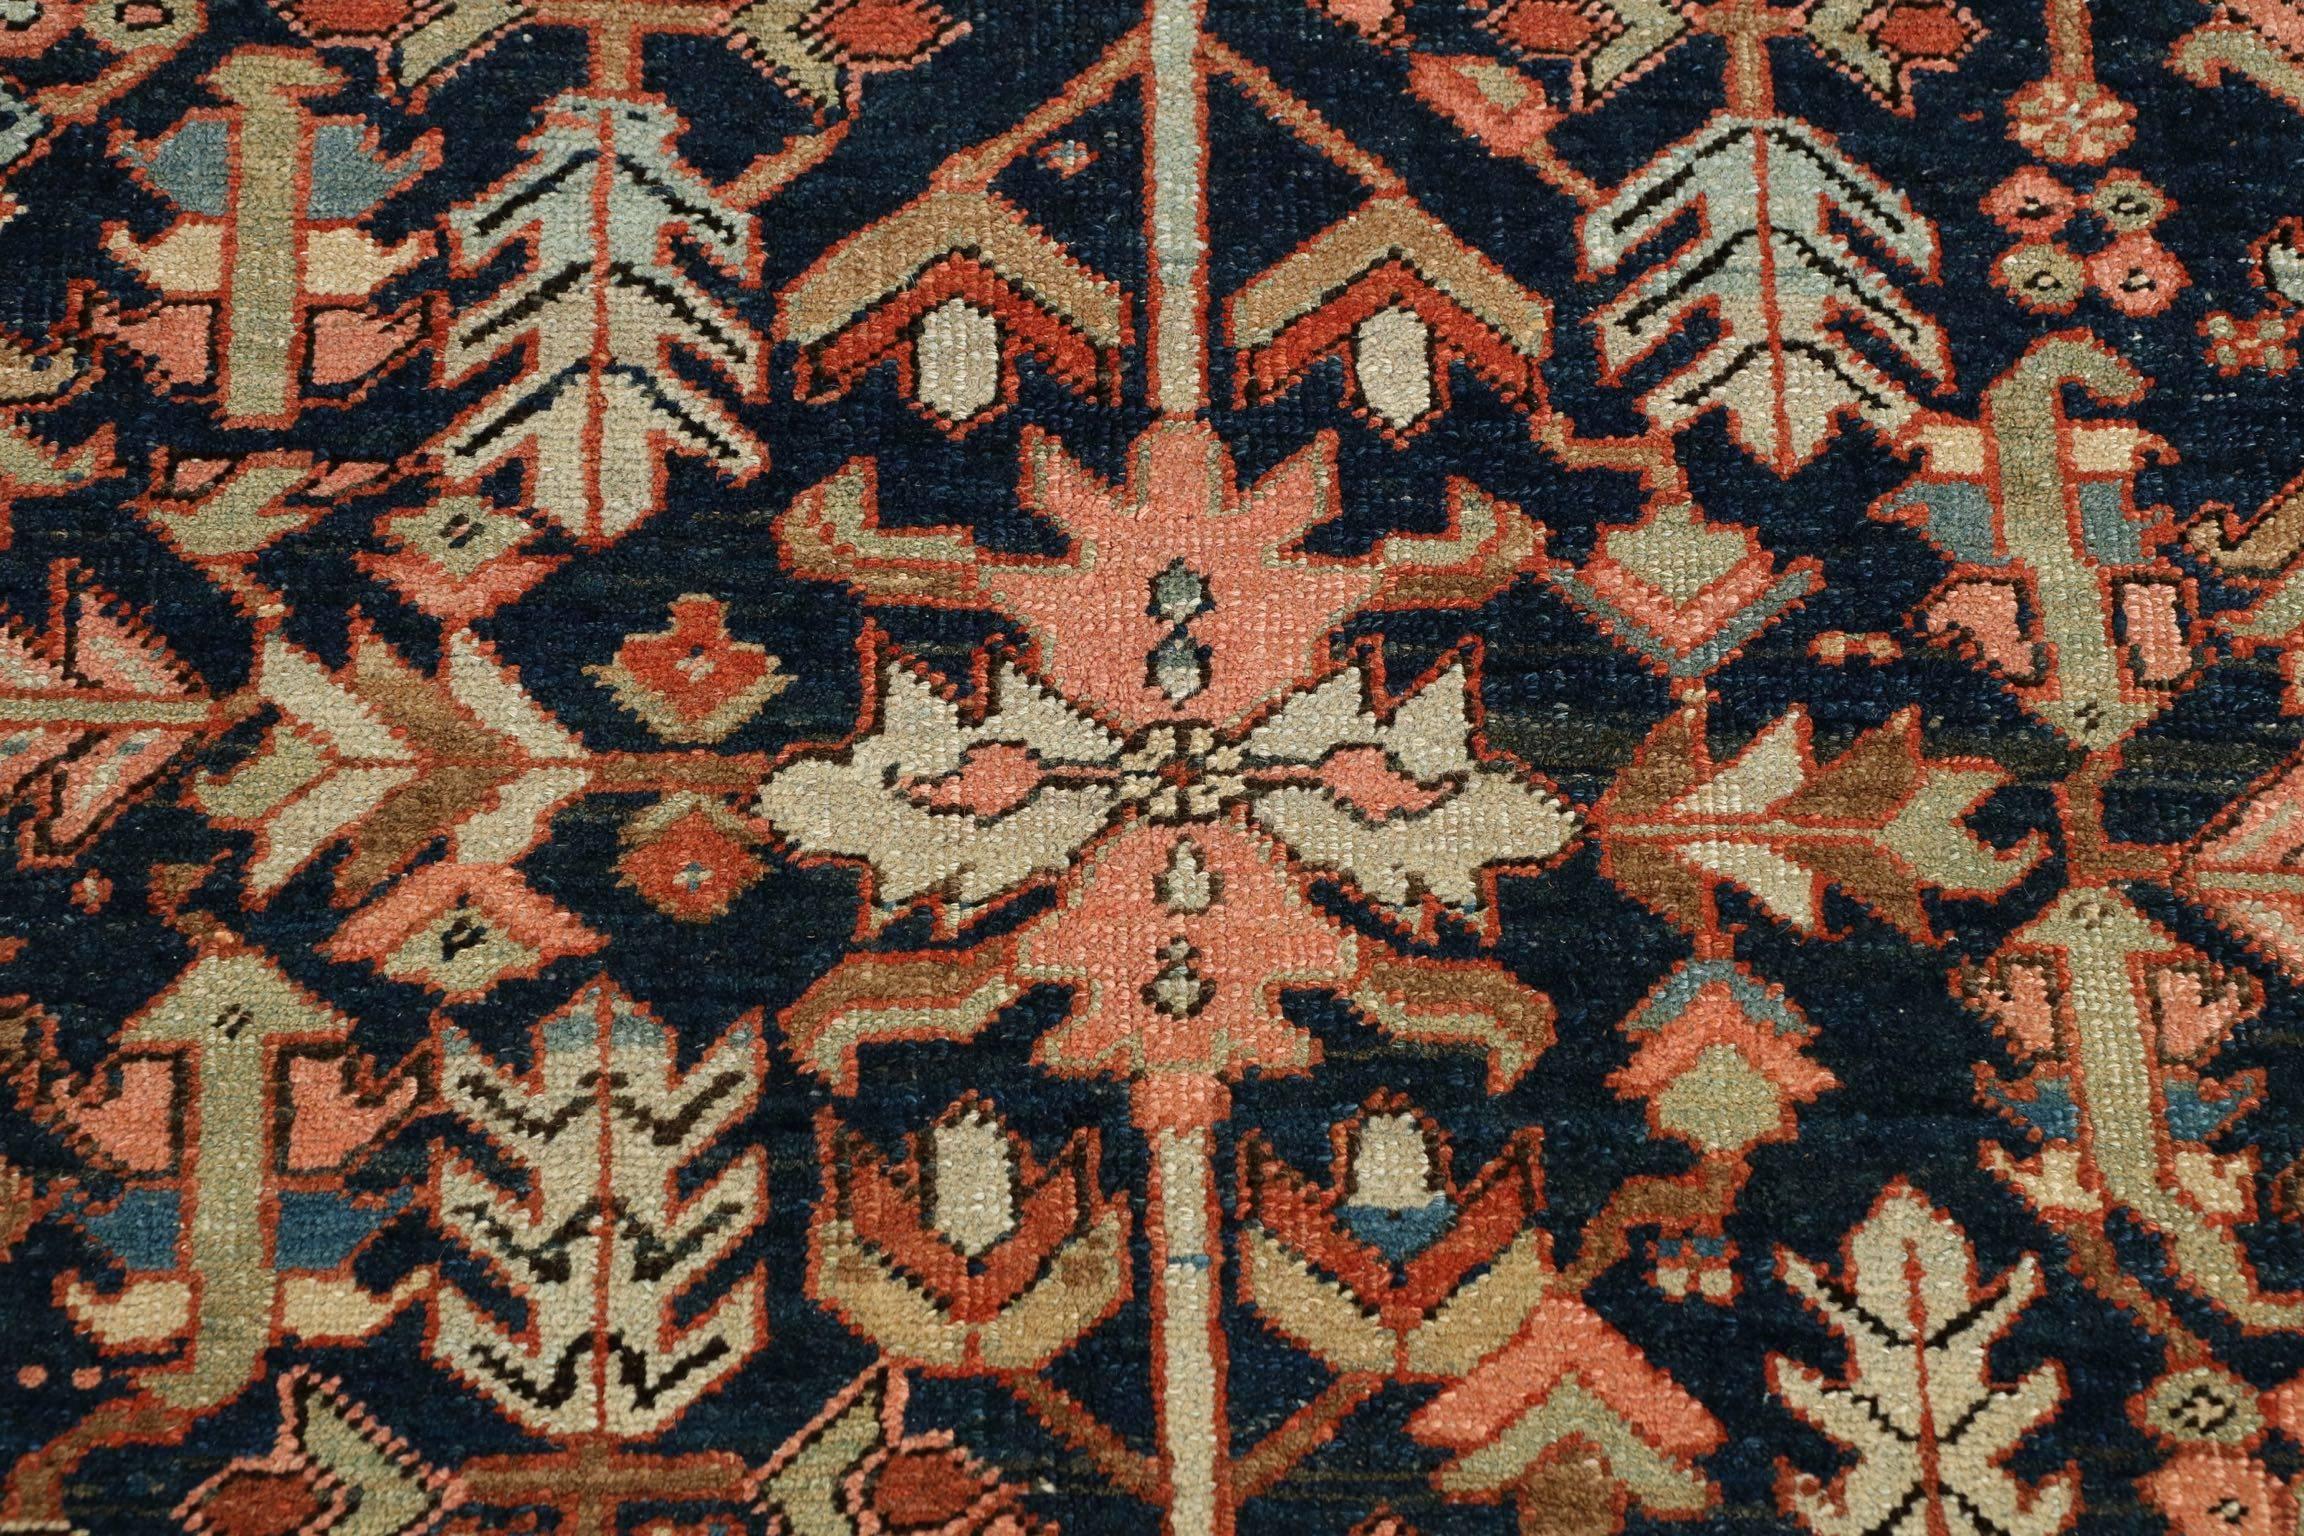 Persian Fine Authentic Room Size Antique Heriz Rug w/ Serapi Colors, circa 1900